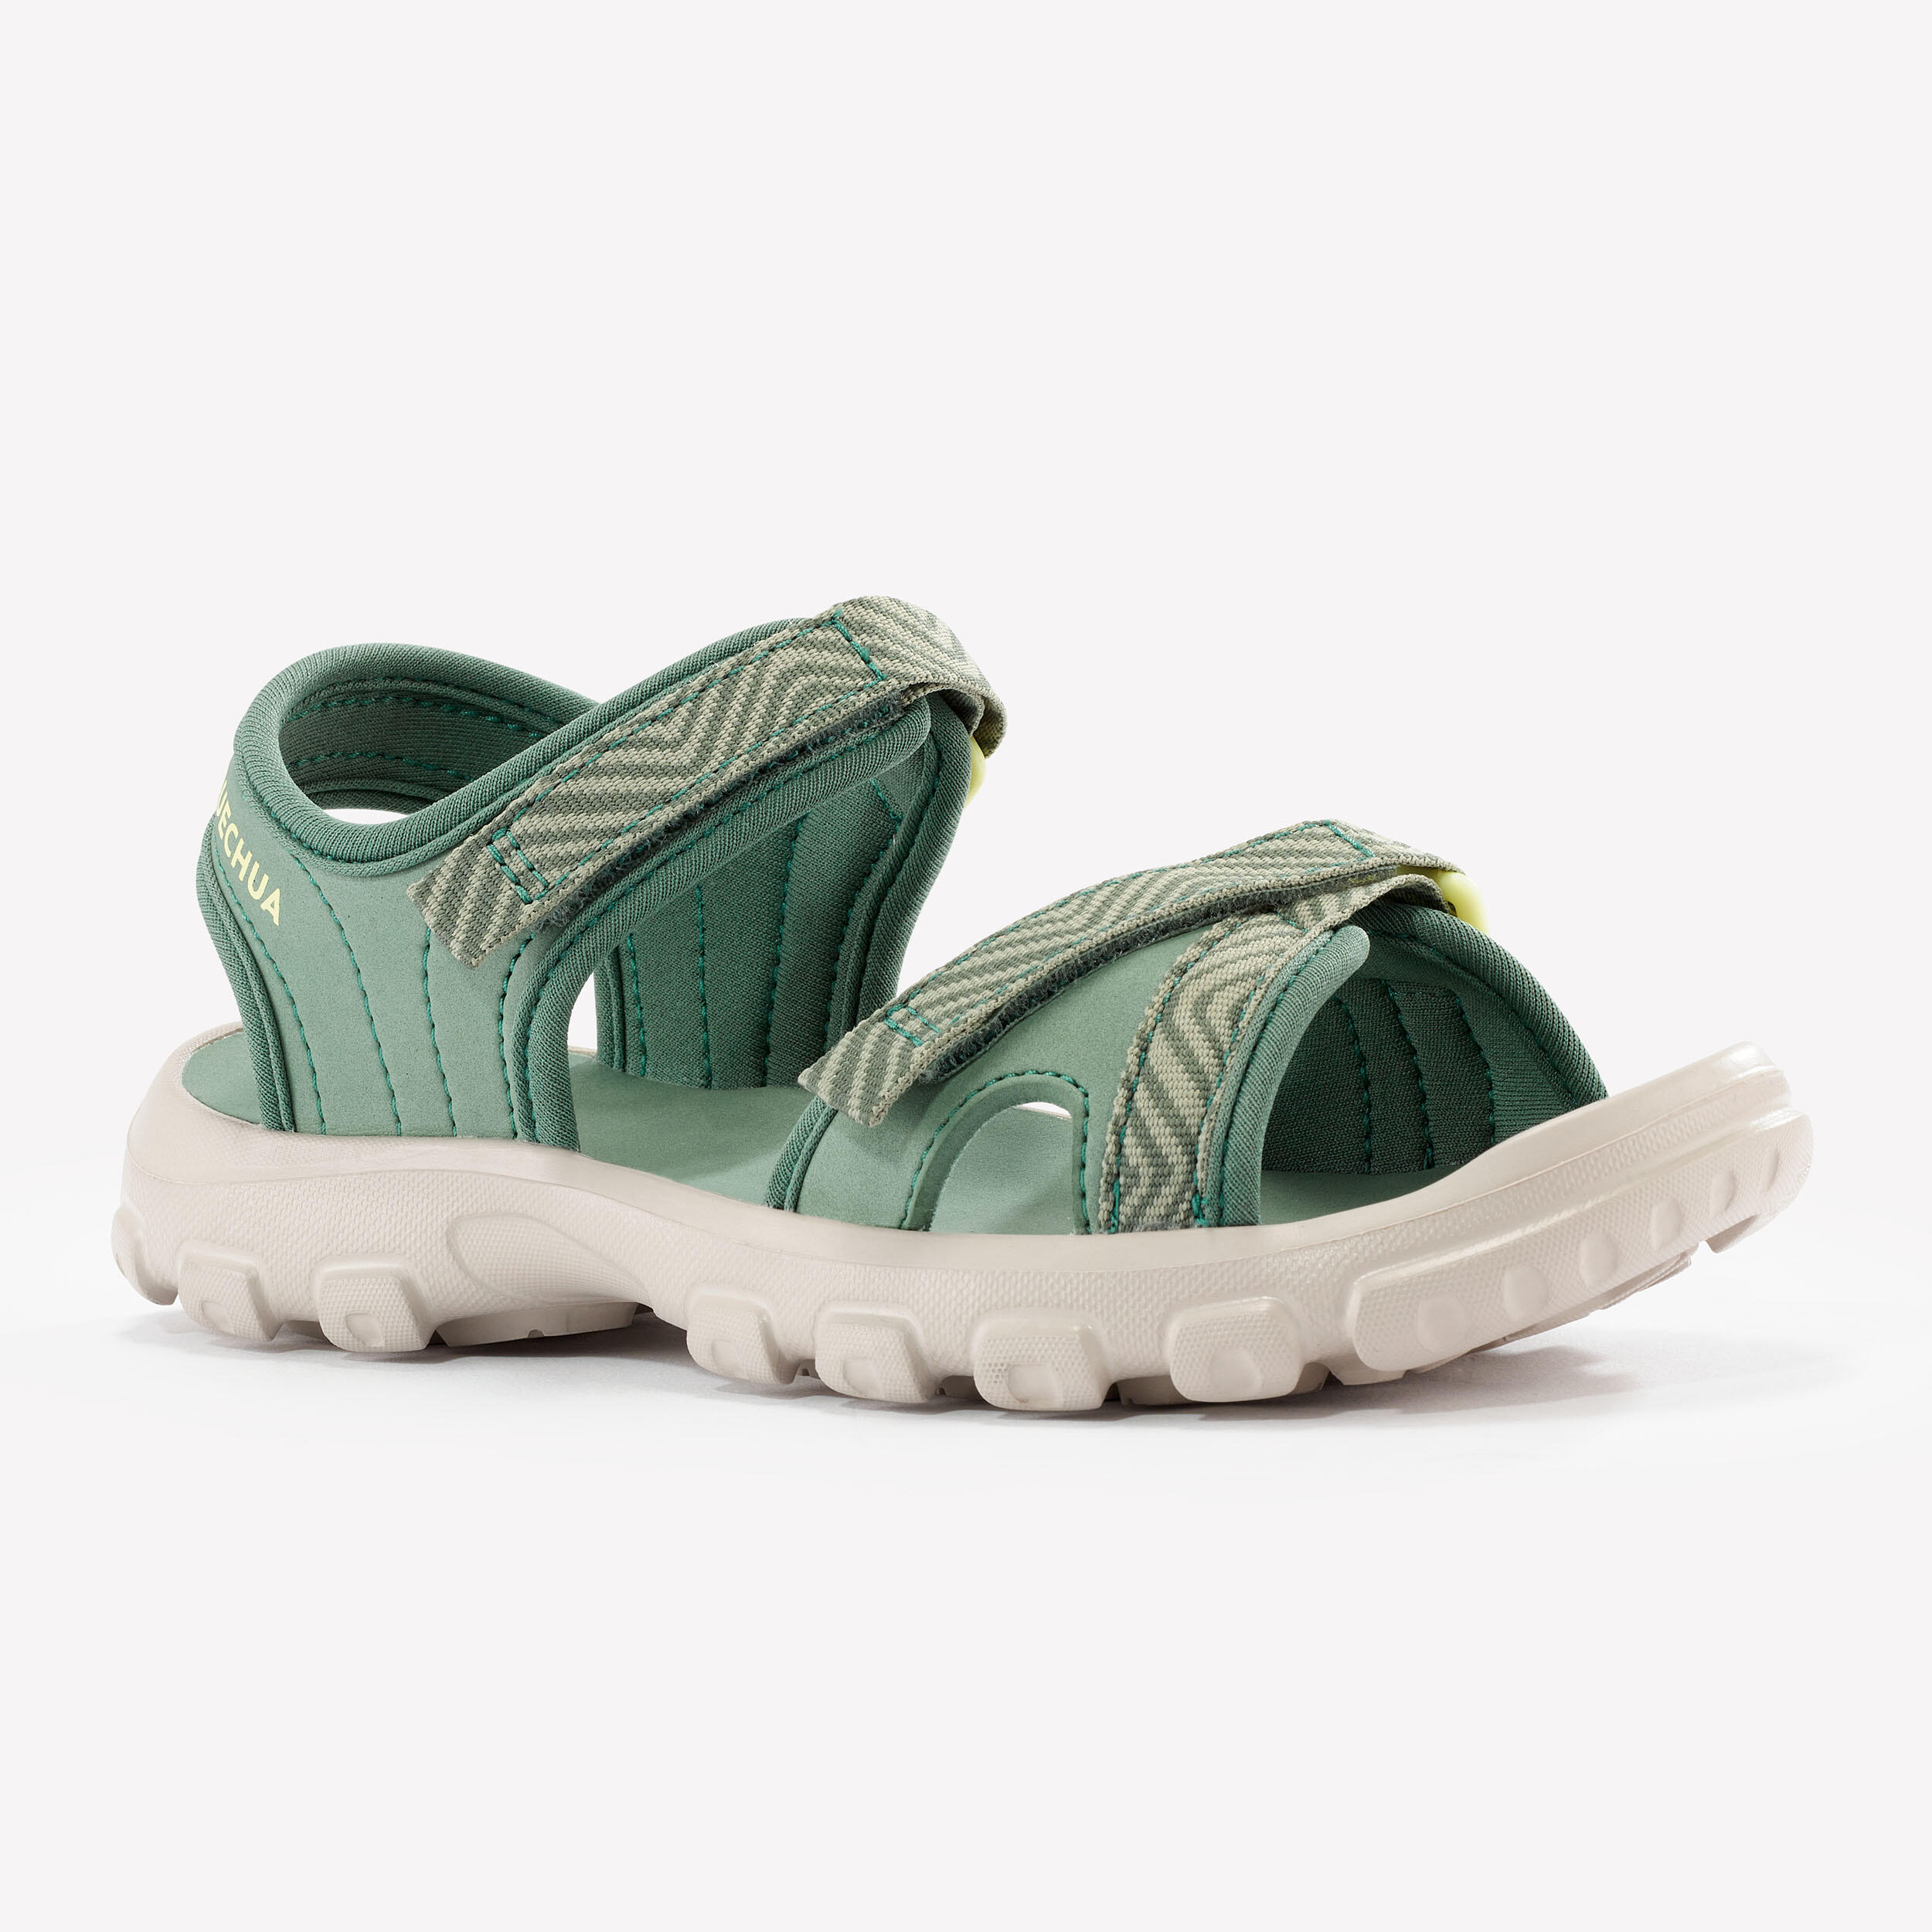 QUECHUA Kids’ Hiking Sandals  - NH100 - UK Kids size 6.5 to 12.5 - Khaki